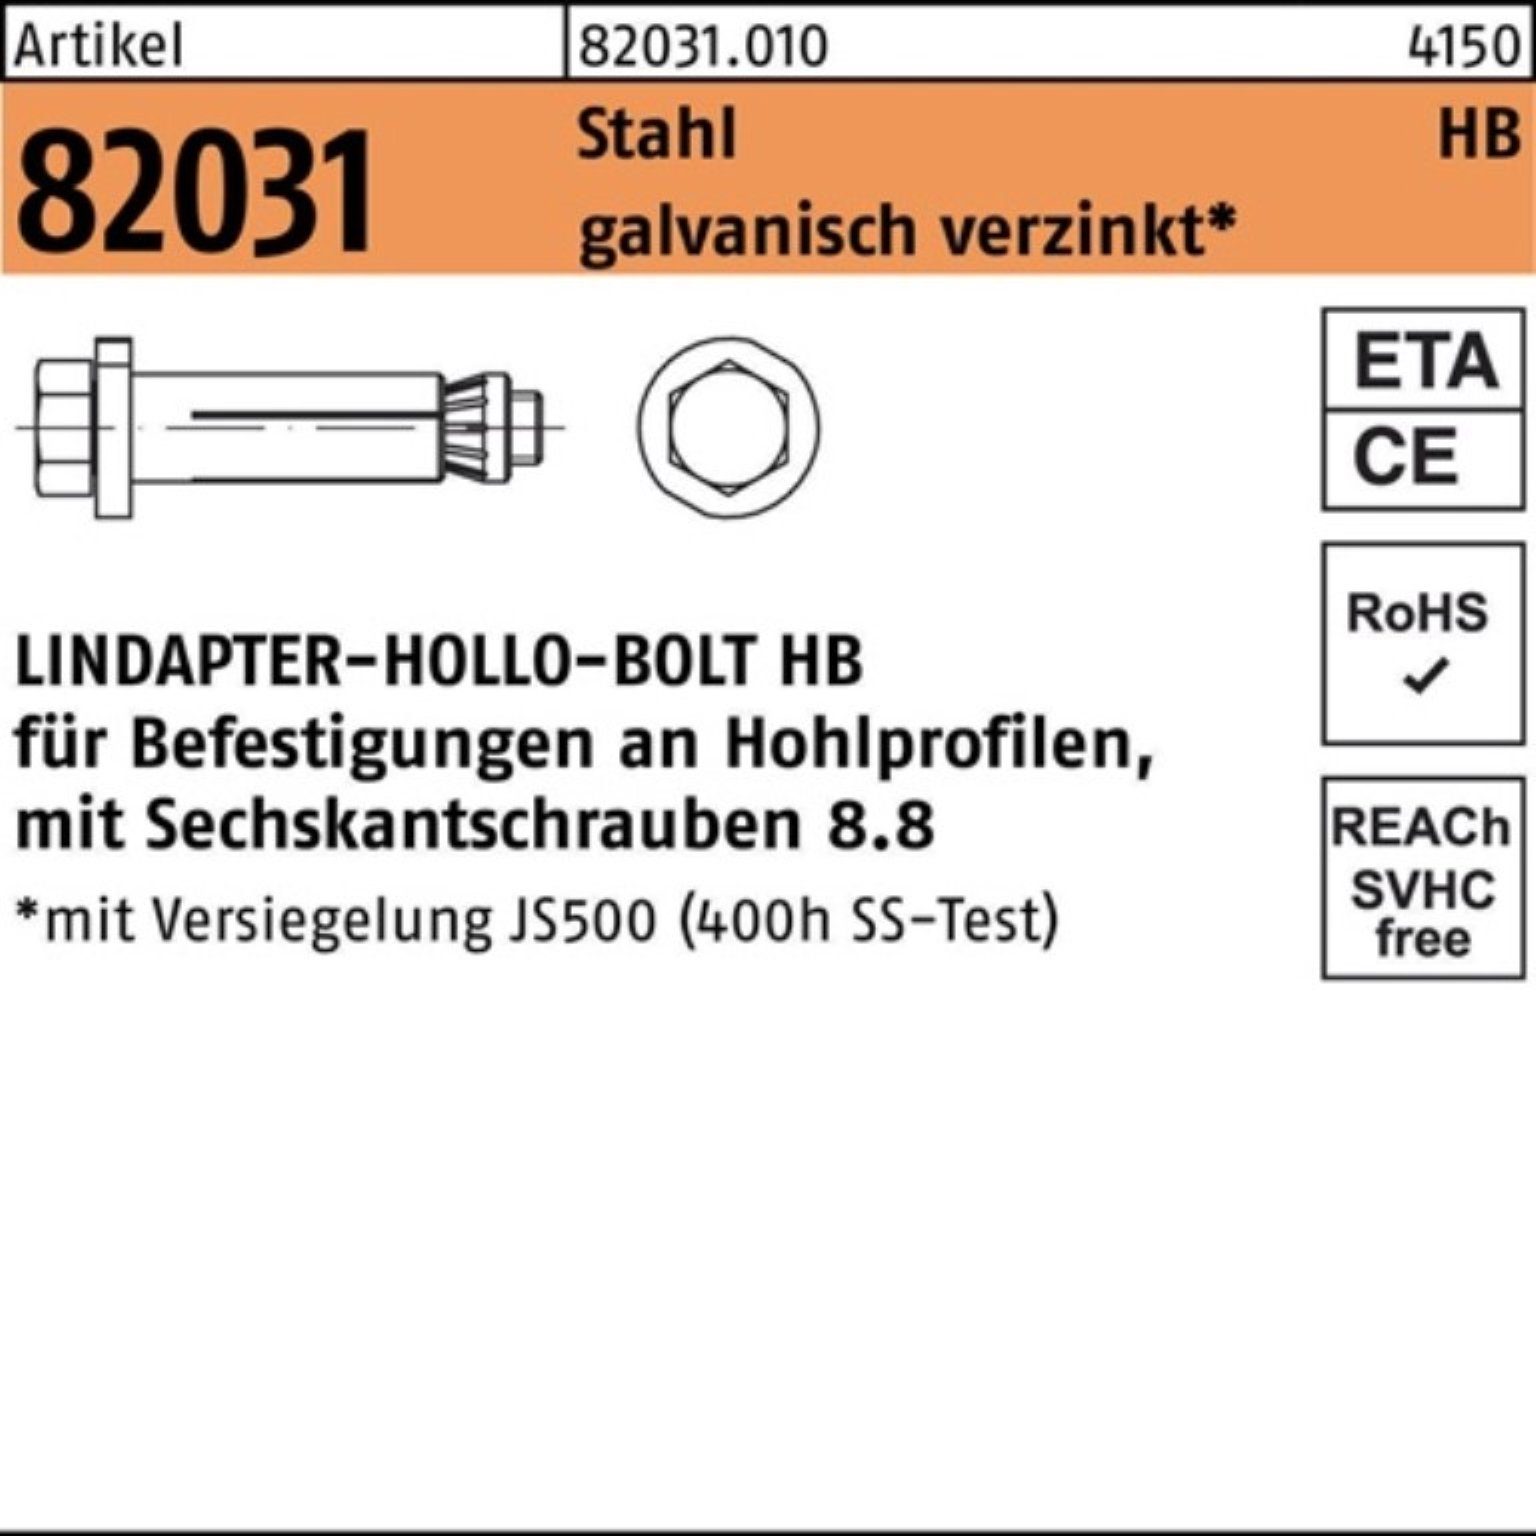 8.8 Pack gal 100er 16-1 Hohlraumdübel (75/29) R 6-ktschraube Hohlraumdübel 82031 HB Lindapter